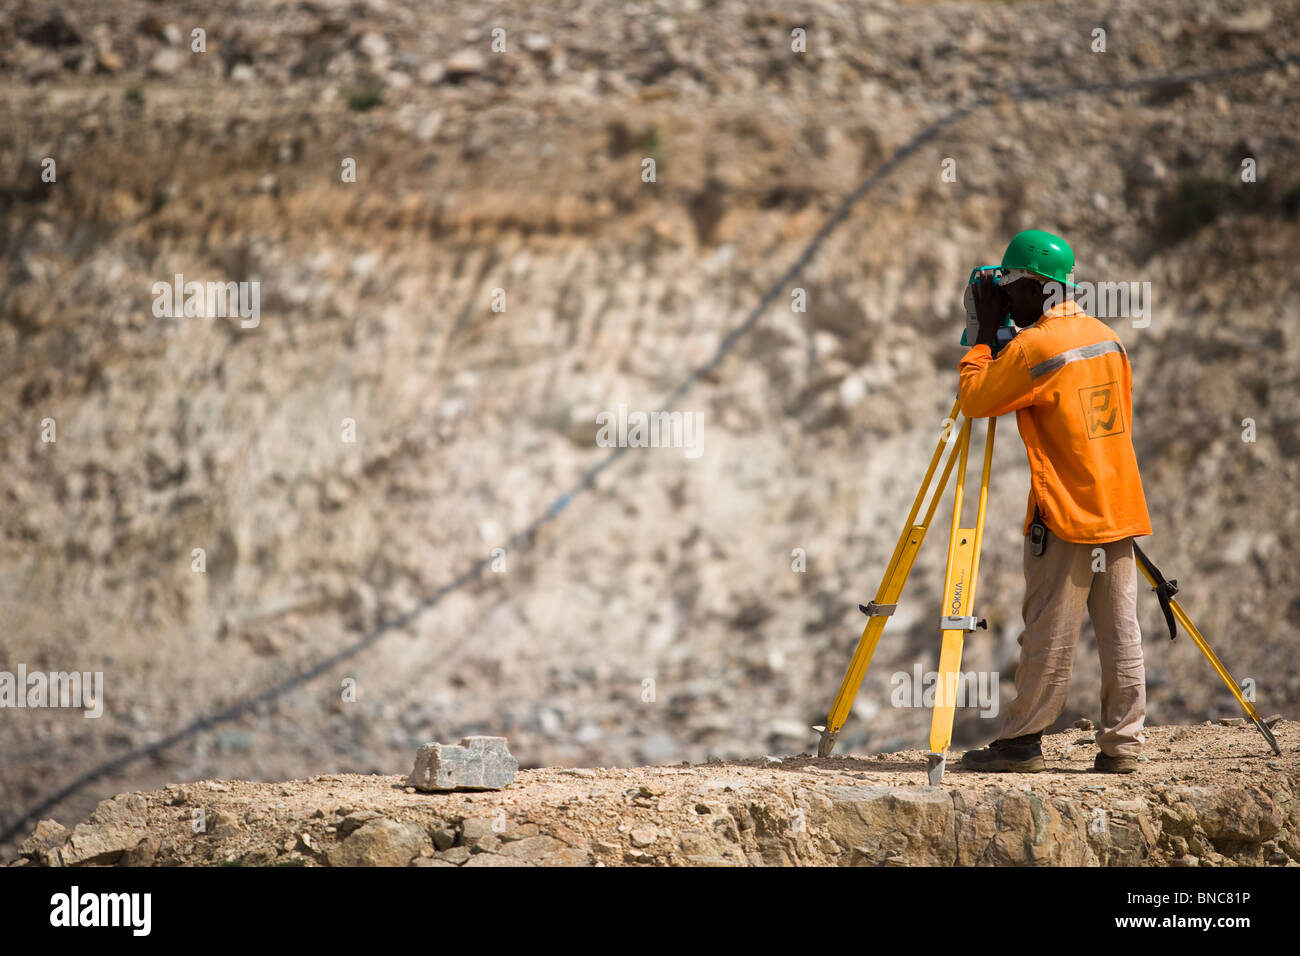 A mine worker surveys at the Youga gold mine near the town of Youga, Burkina Faso. Stock Photo